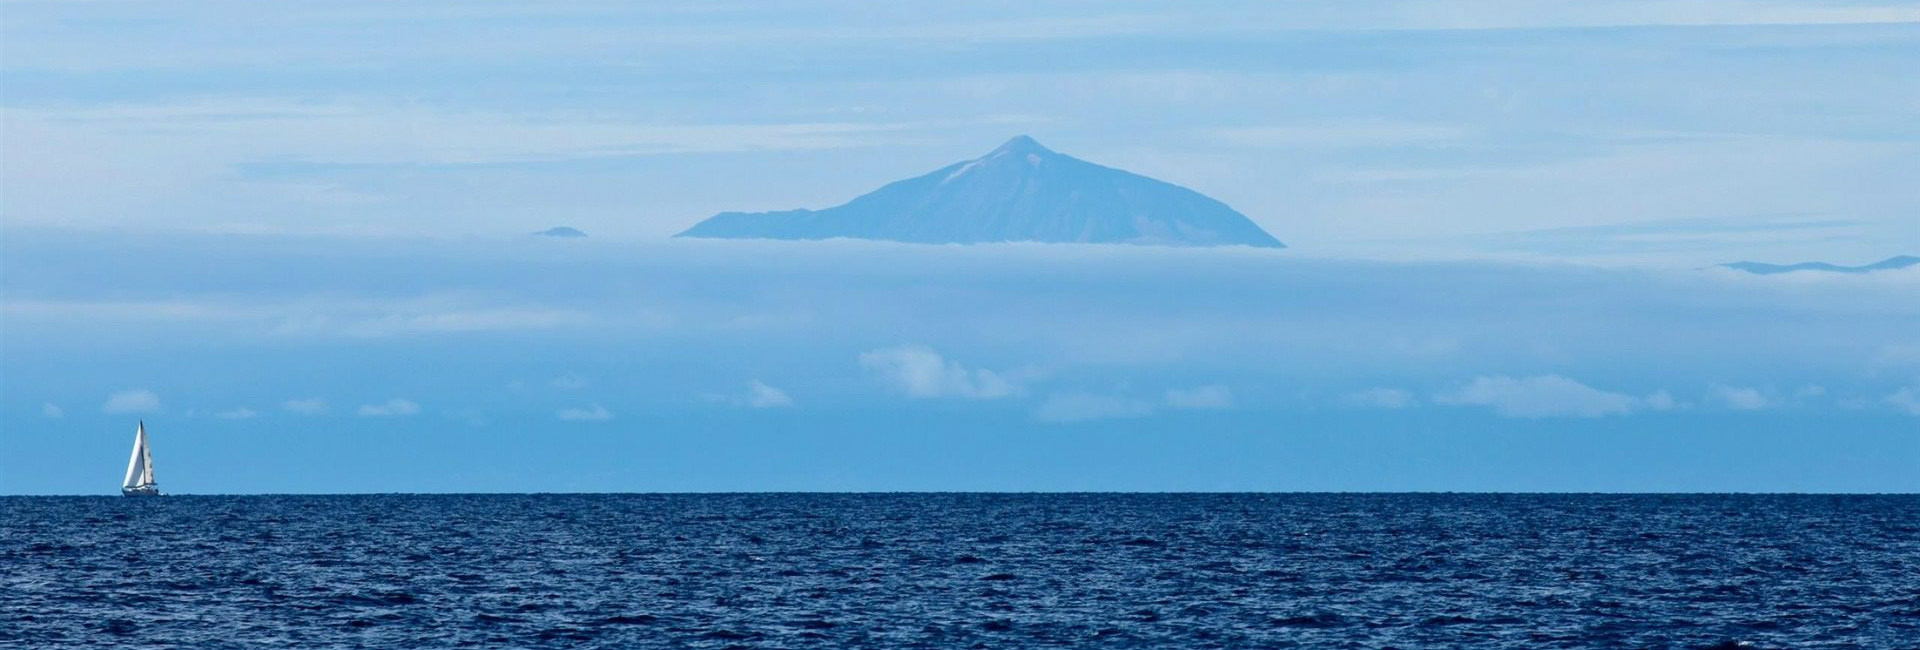 Вулкан  Тэйде вид с океана